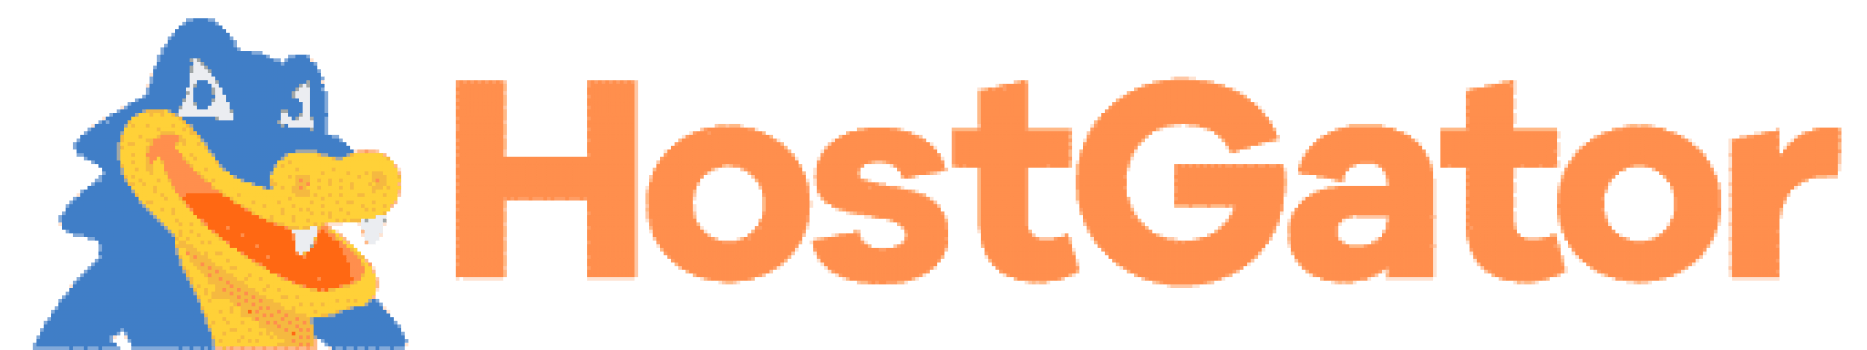 Hostgator Review